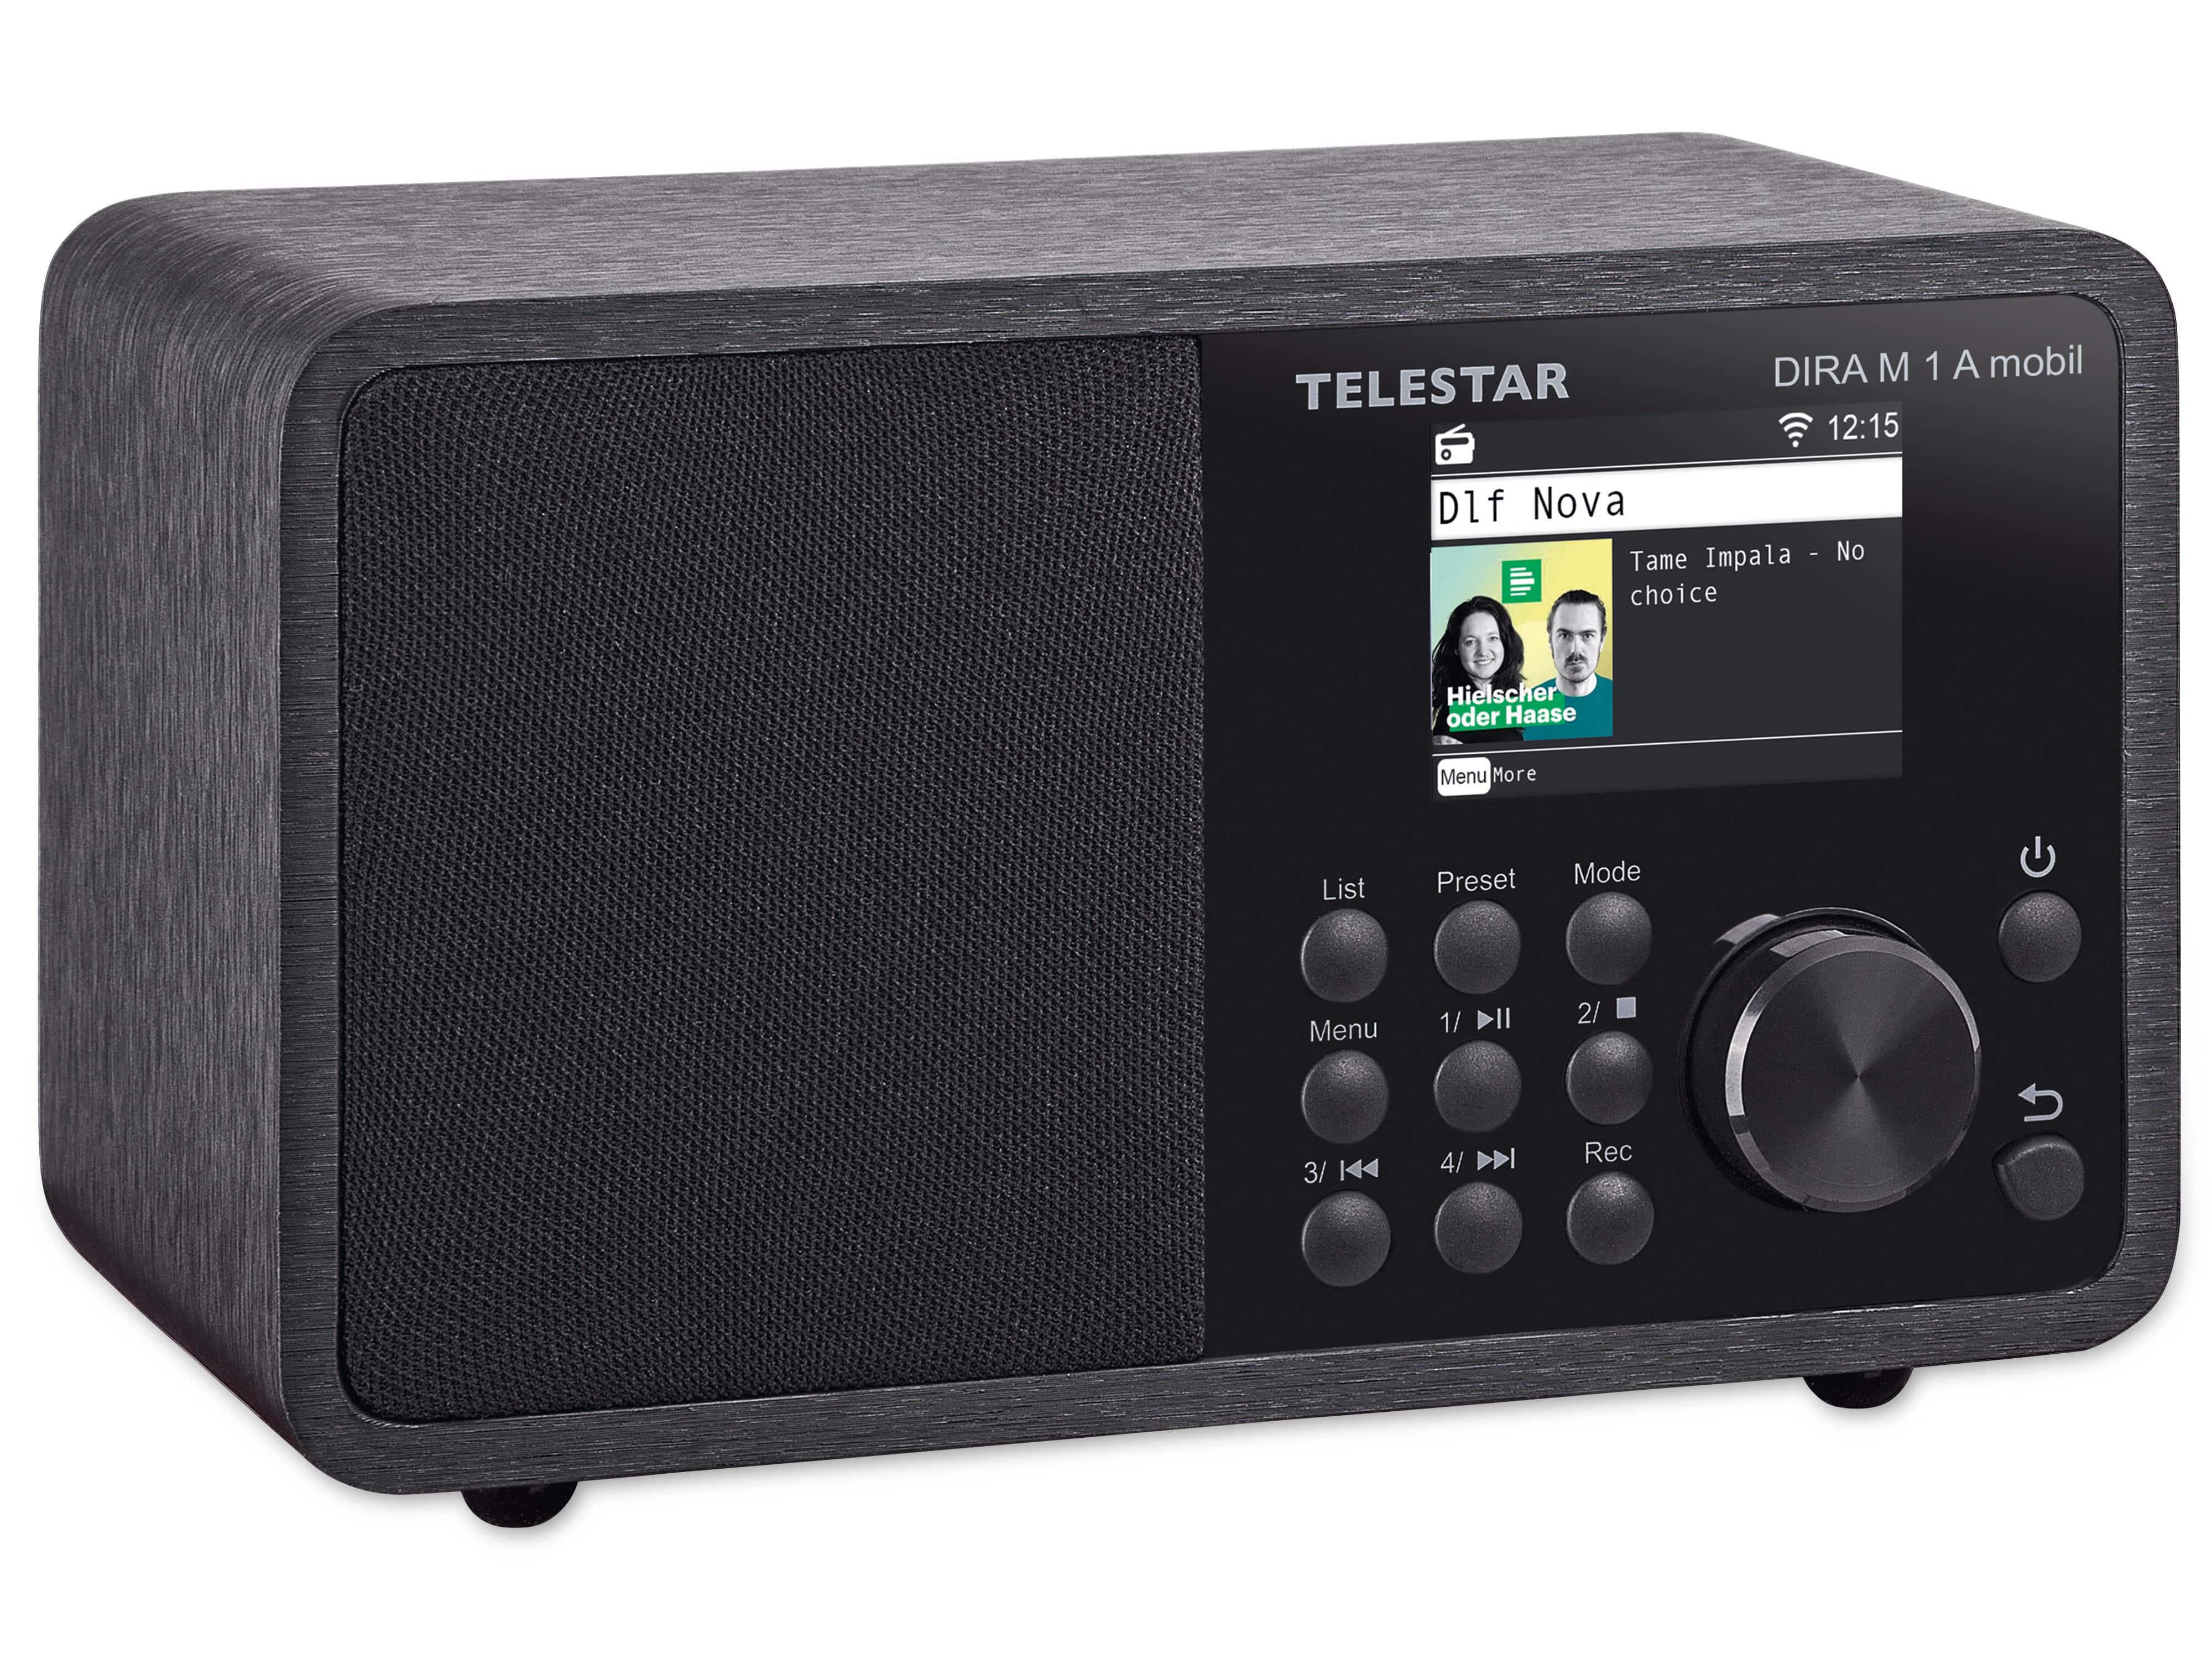 TELESTAR DAB+/UKW Radio DIRA M1A mobile, Warnsystem, Akku